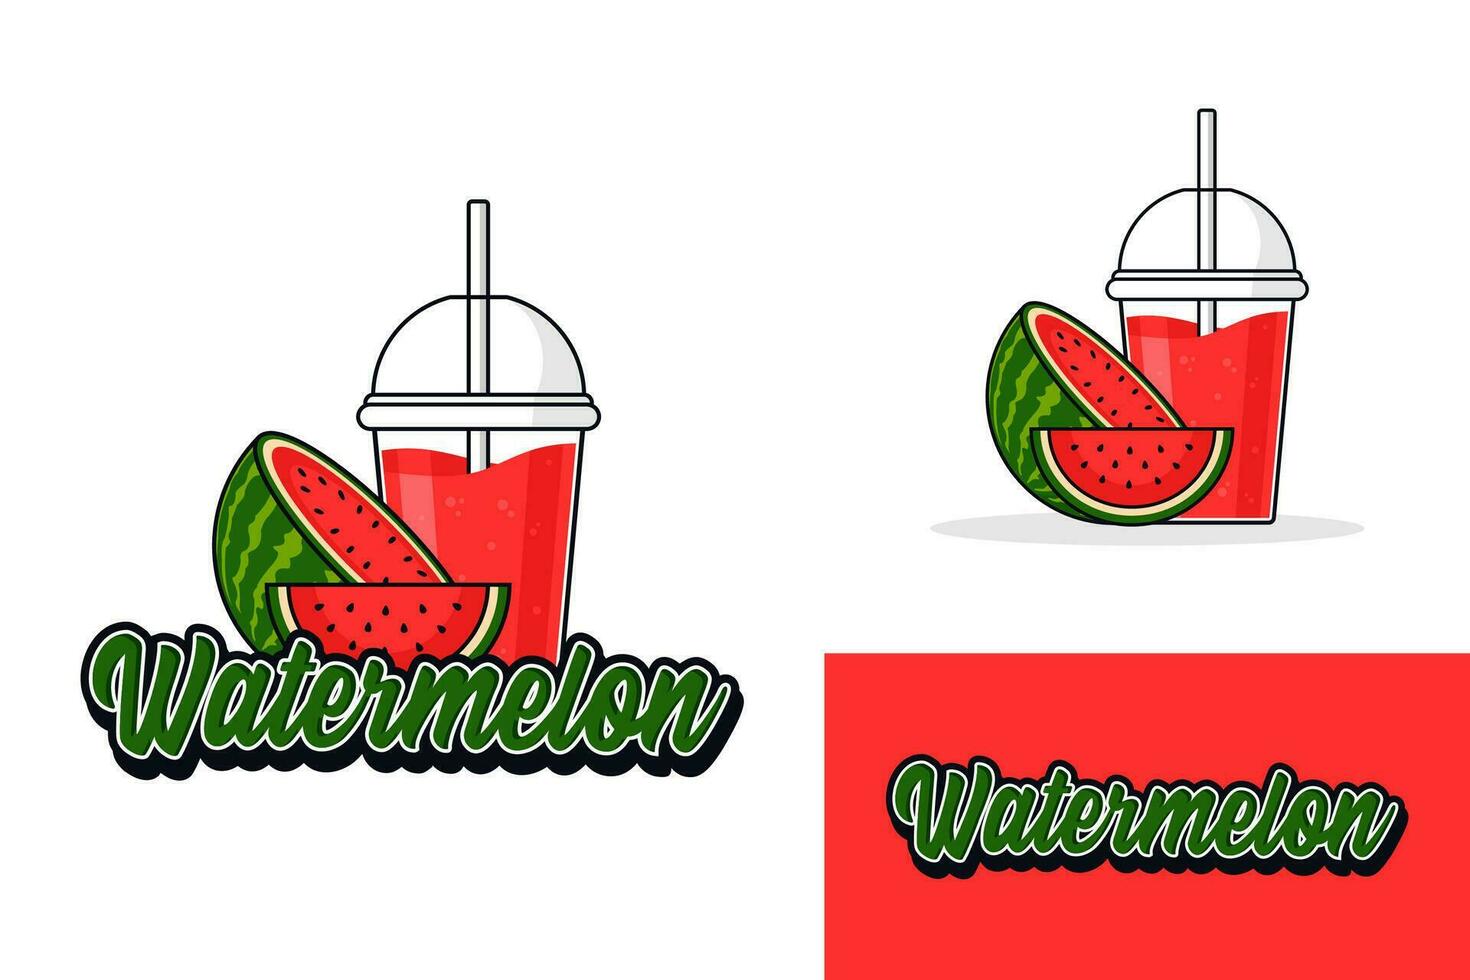 Watermelon juice drink logo design illustration collection vector